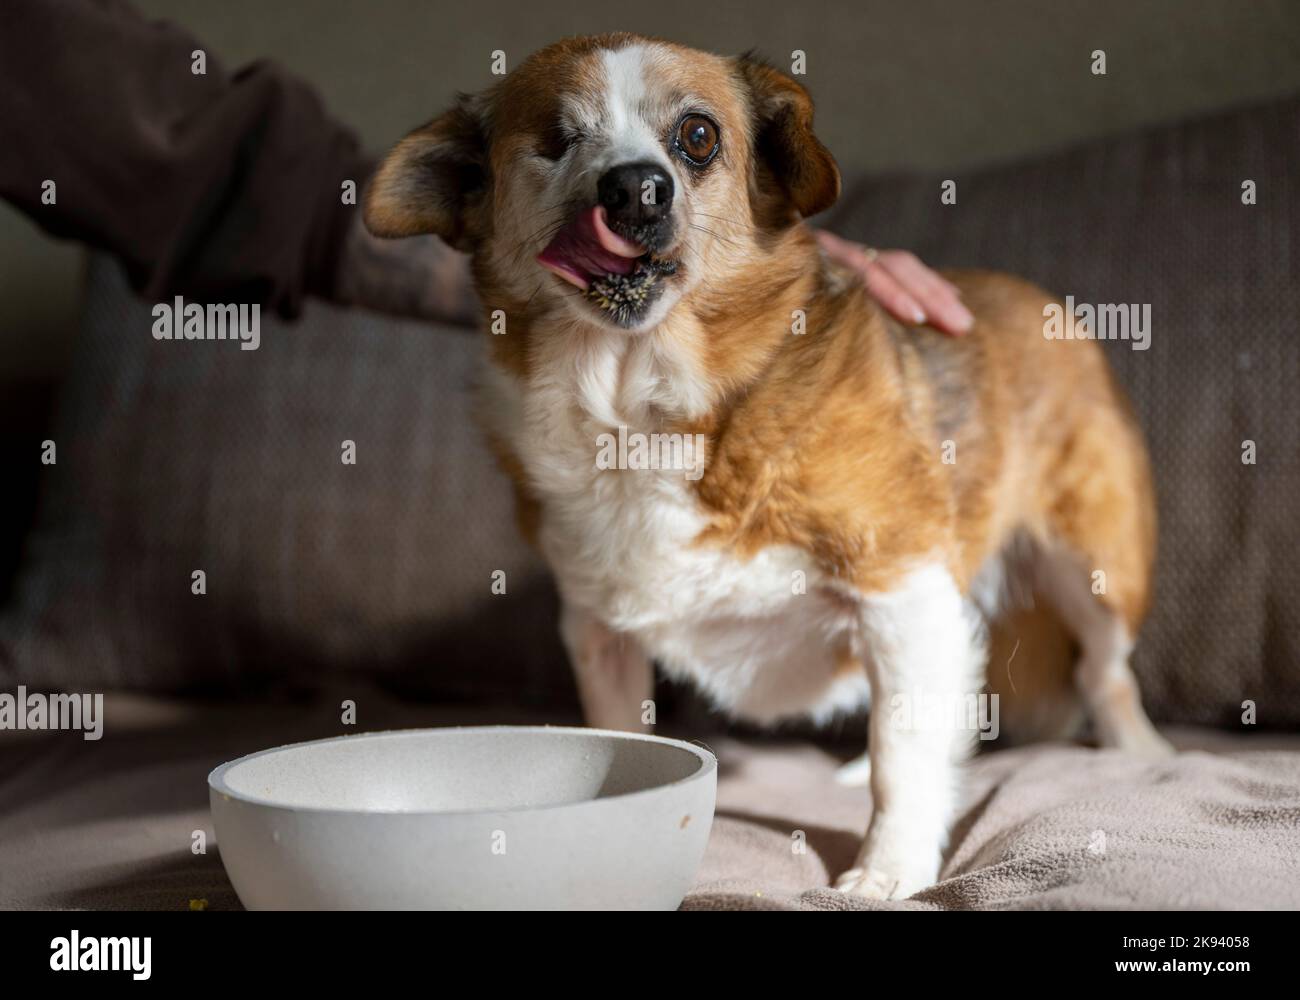 Dog sofa damaged hi-res stock photography and images - Alamy